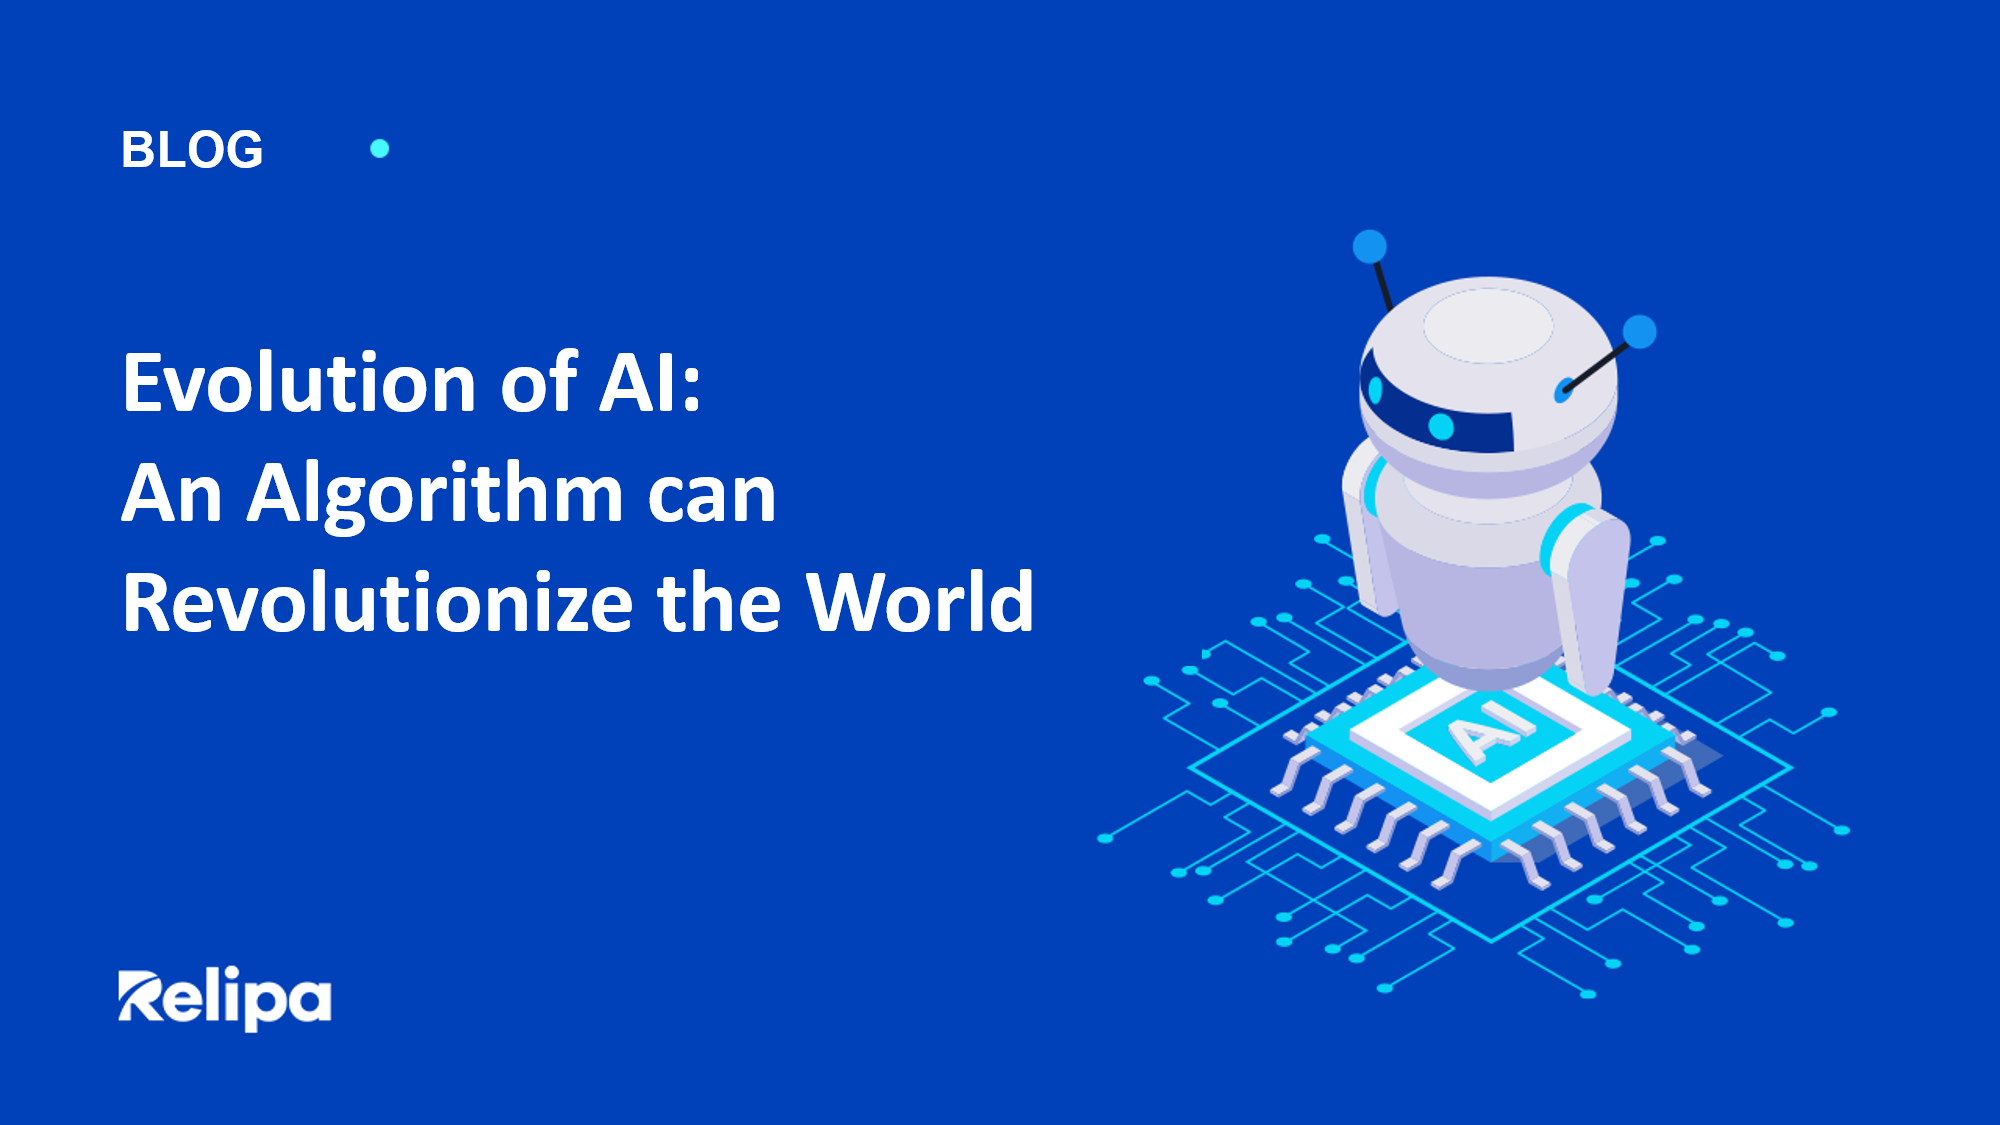 Evolution of AI: An Algorithm can revolutionize the World